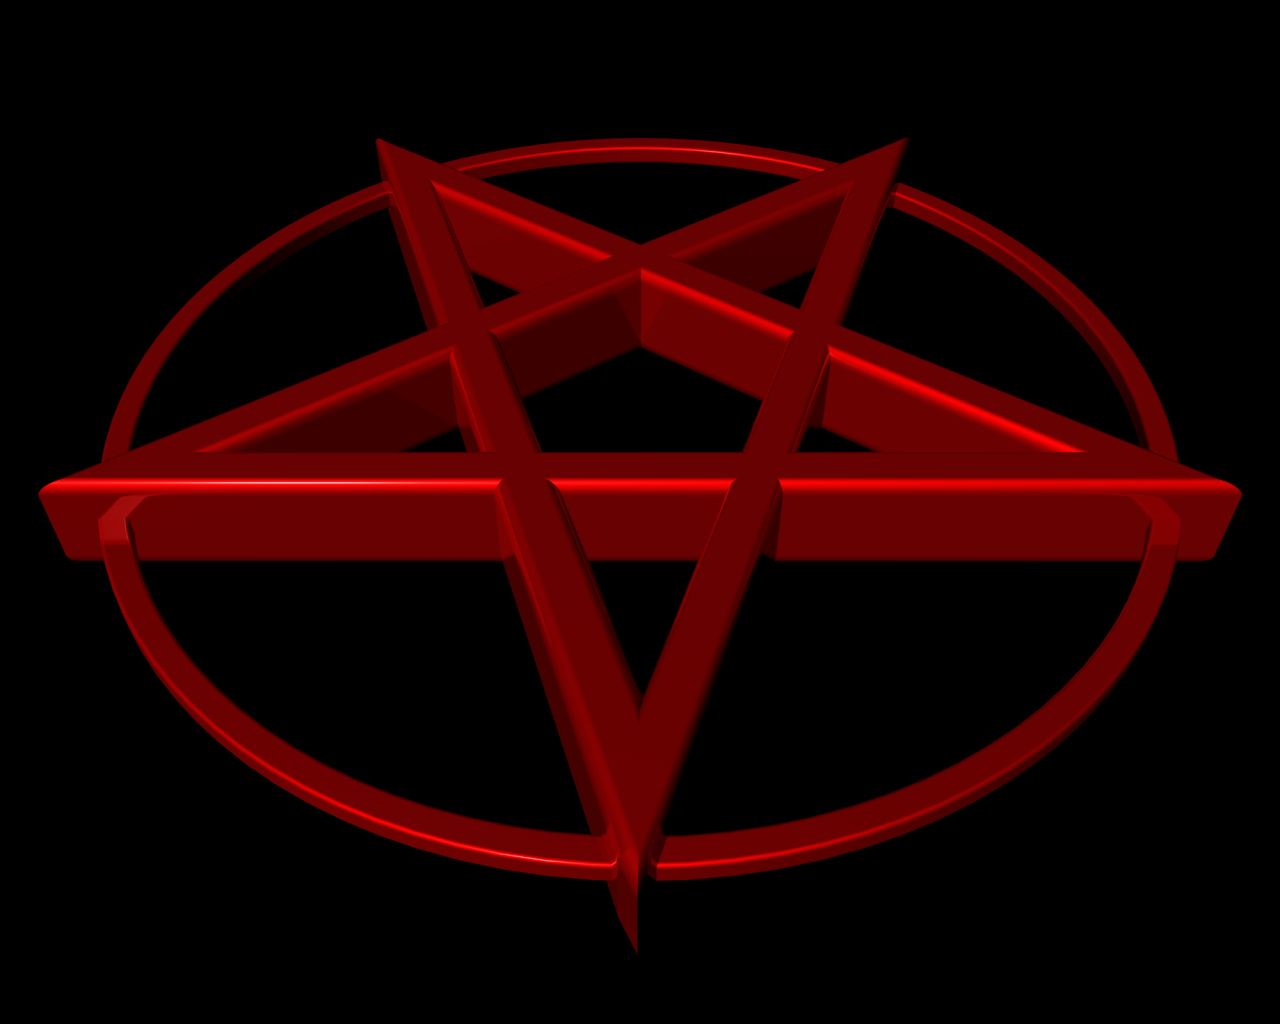 pentagramm tapete,rot,symbol,symmetrie,grafik,dreieck